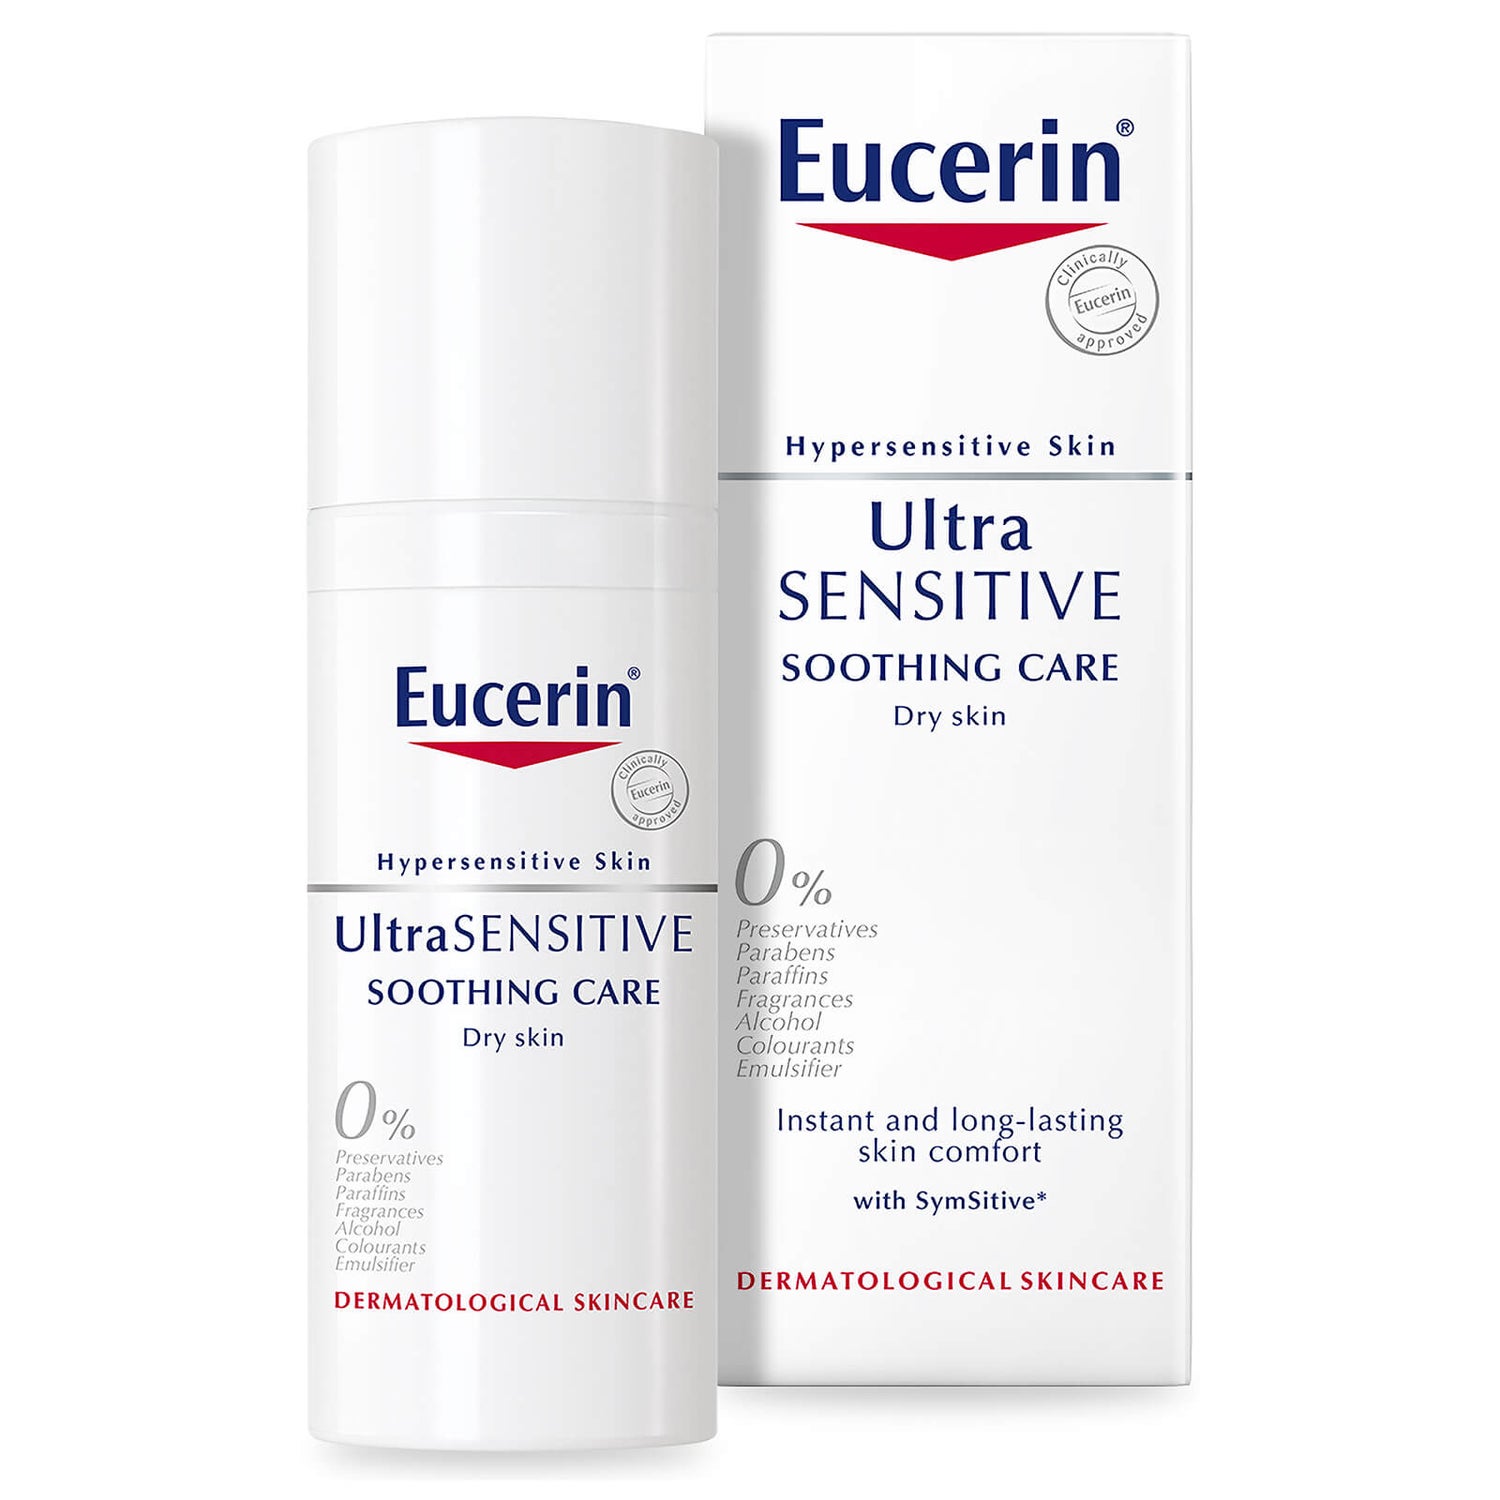 Eucerin® Hypersensitive Soin apaisant ultra sensible peaux hypersensibles (50ml)